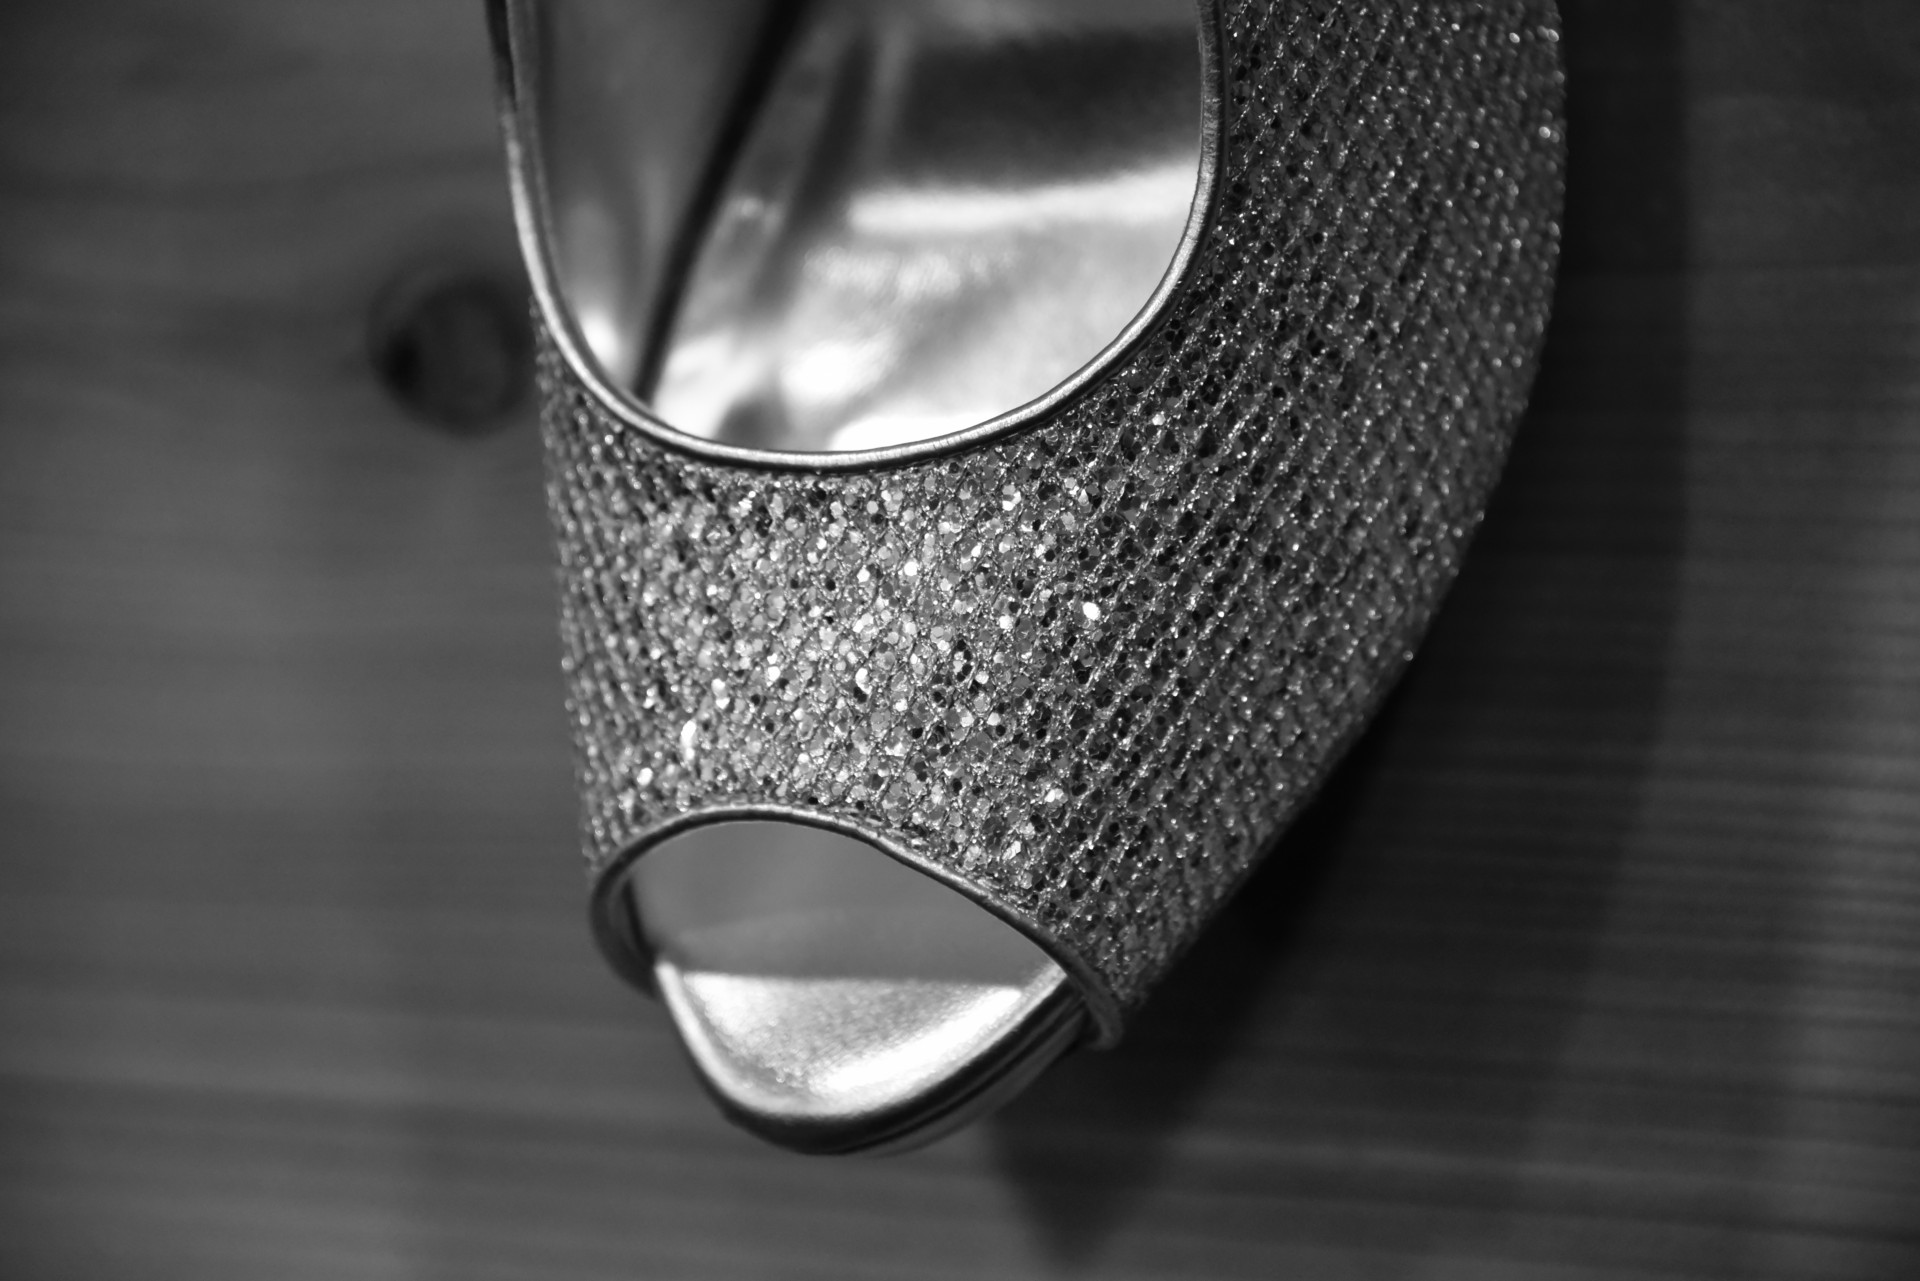 The toe of a woman's rhinestone heel dress shoe